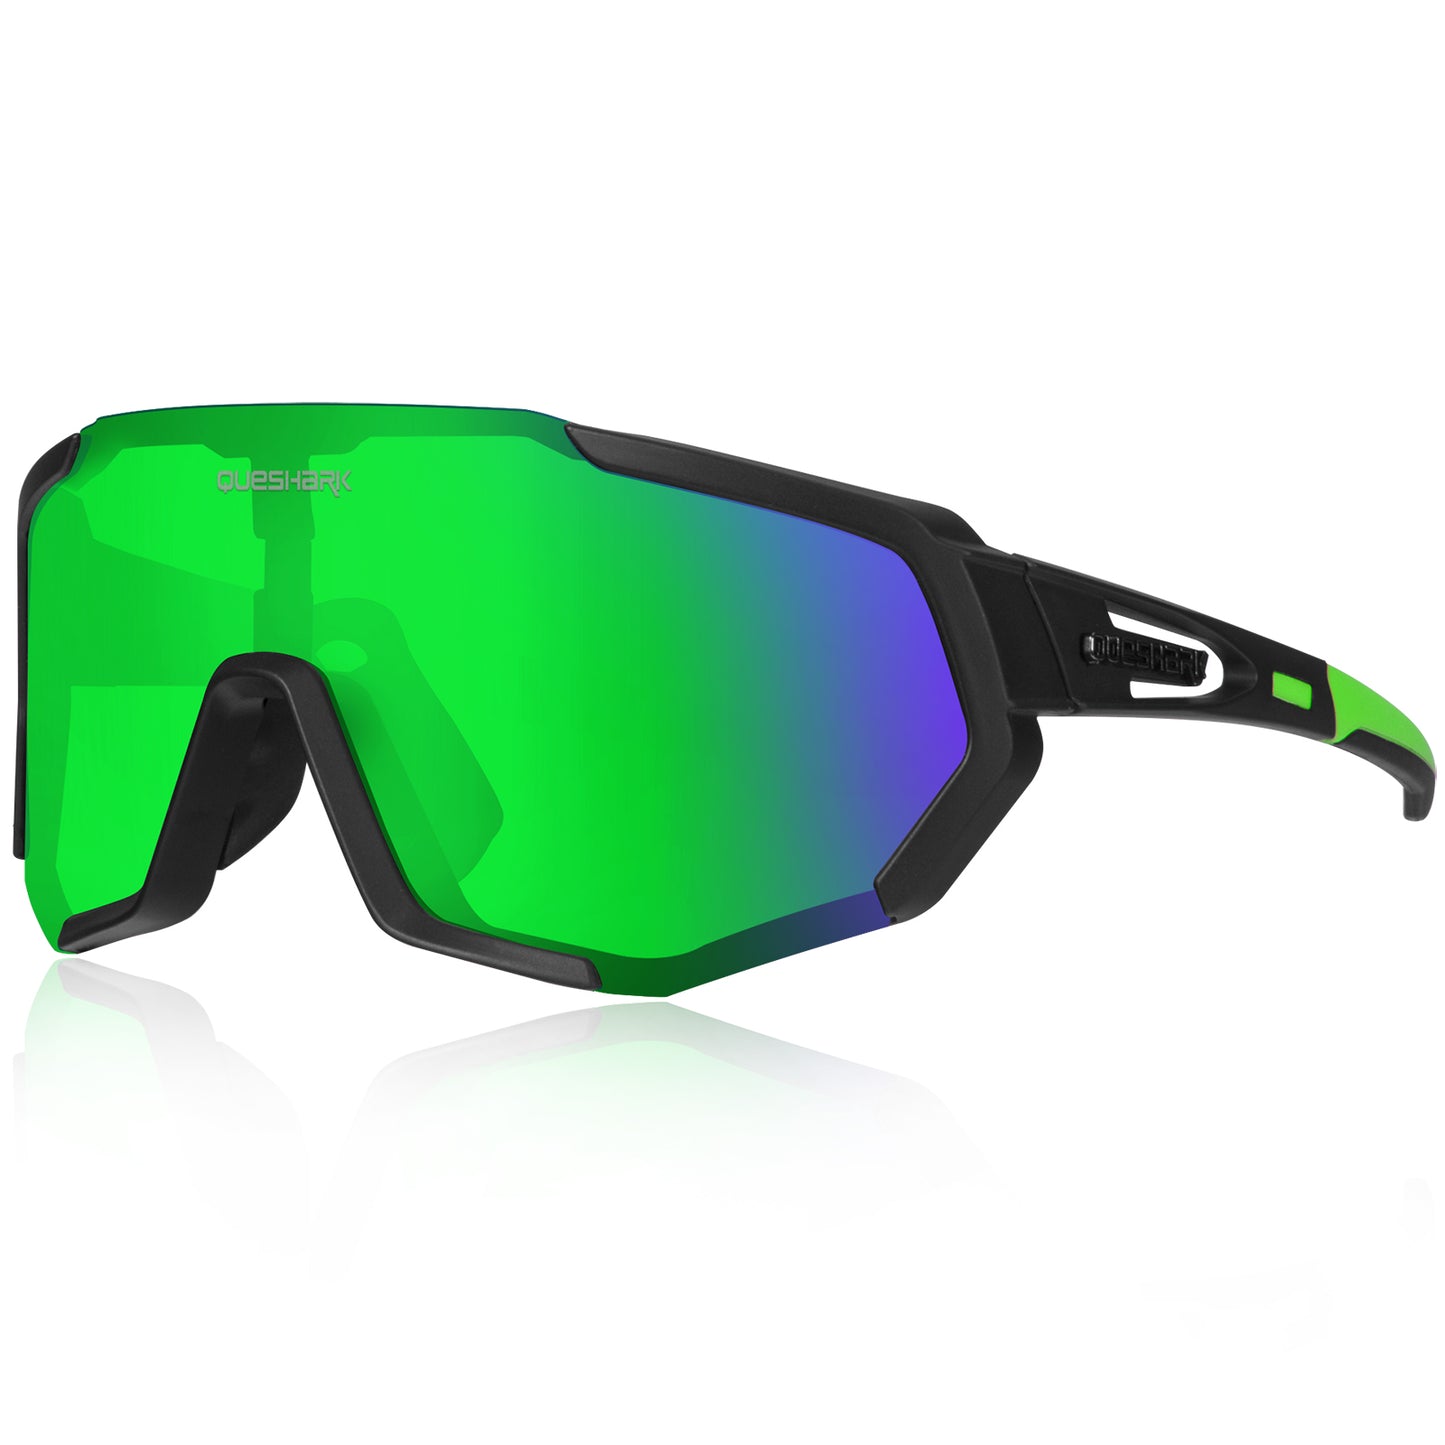 <transcy>QE48 noir vert lunettes polarisées vélo lunettes de soleil lunettes de vélo lunettes de cyclisme UV400 5 lentille/ensemble</transcy>